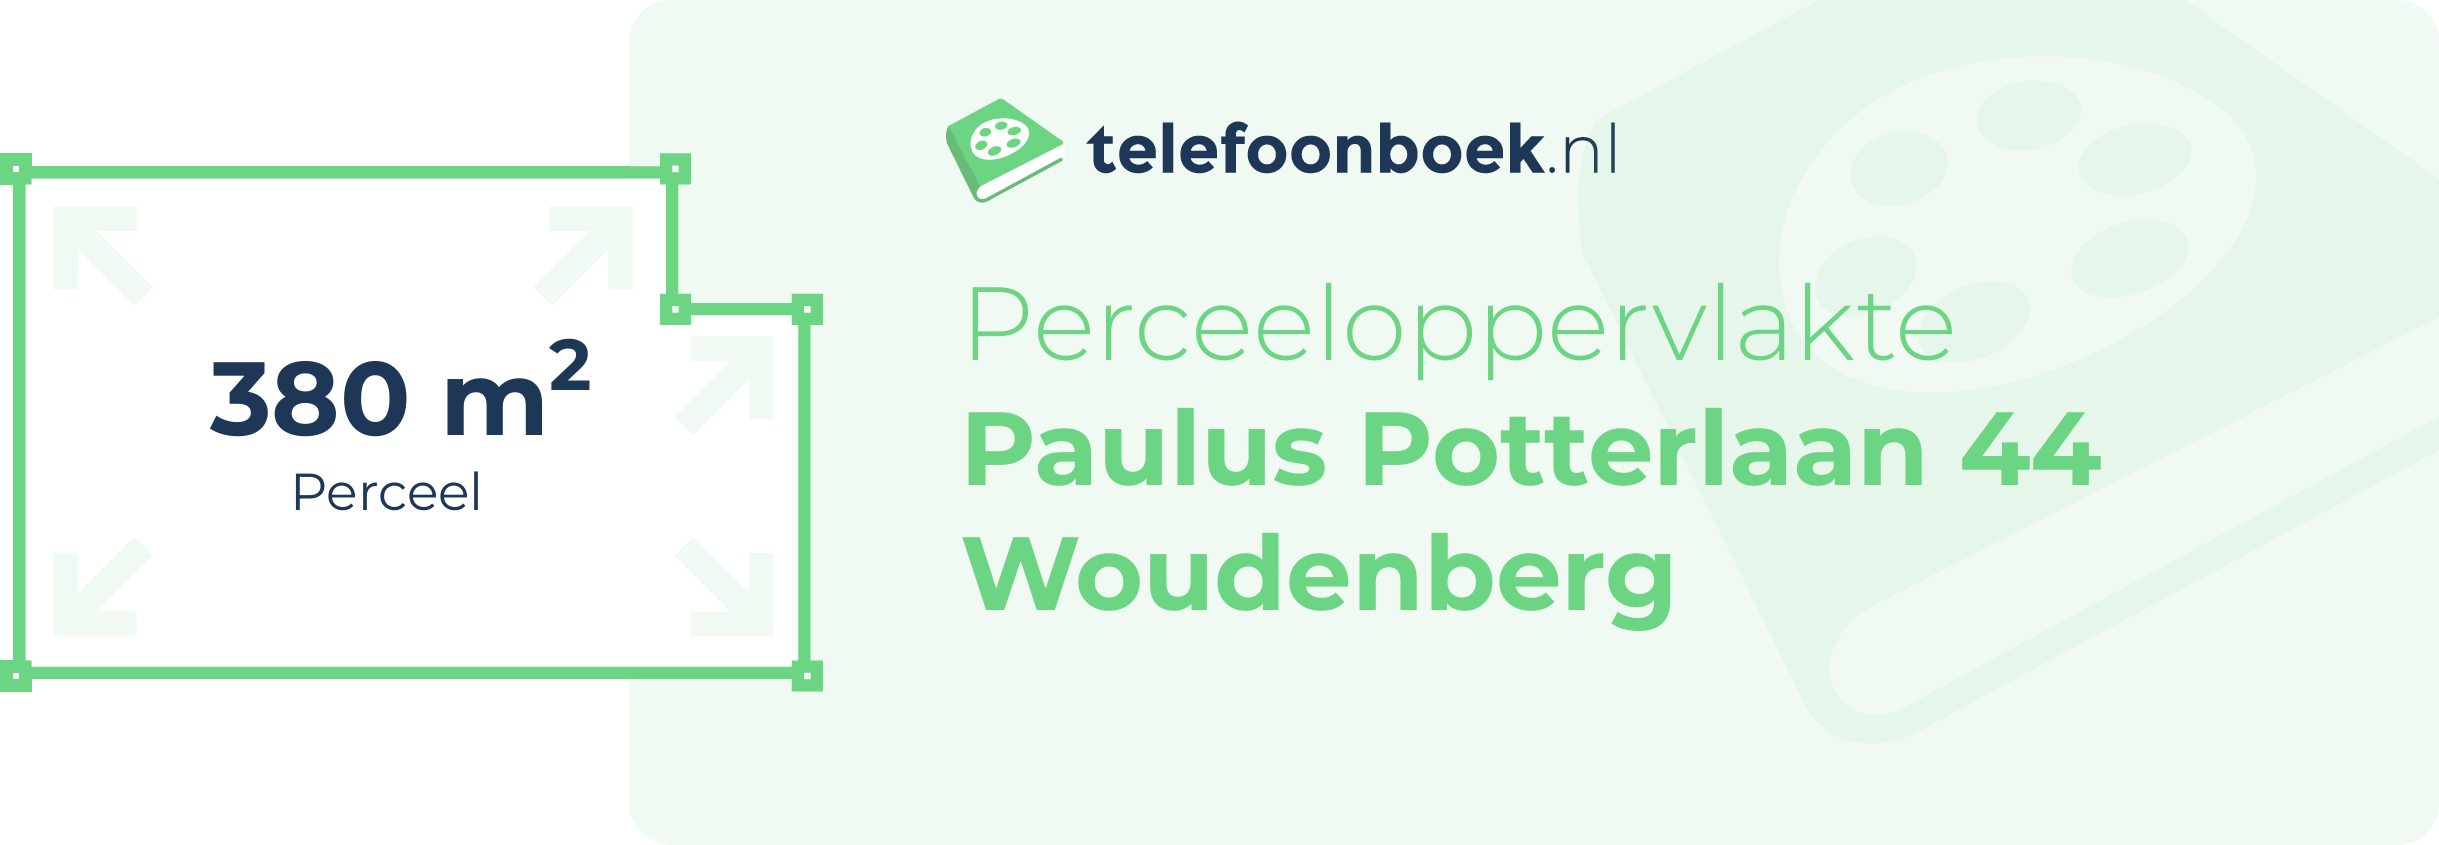 Perceeloppervlakte Paulus Potterlaan 44 Woudenberg